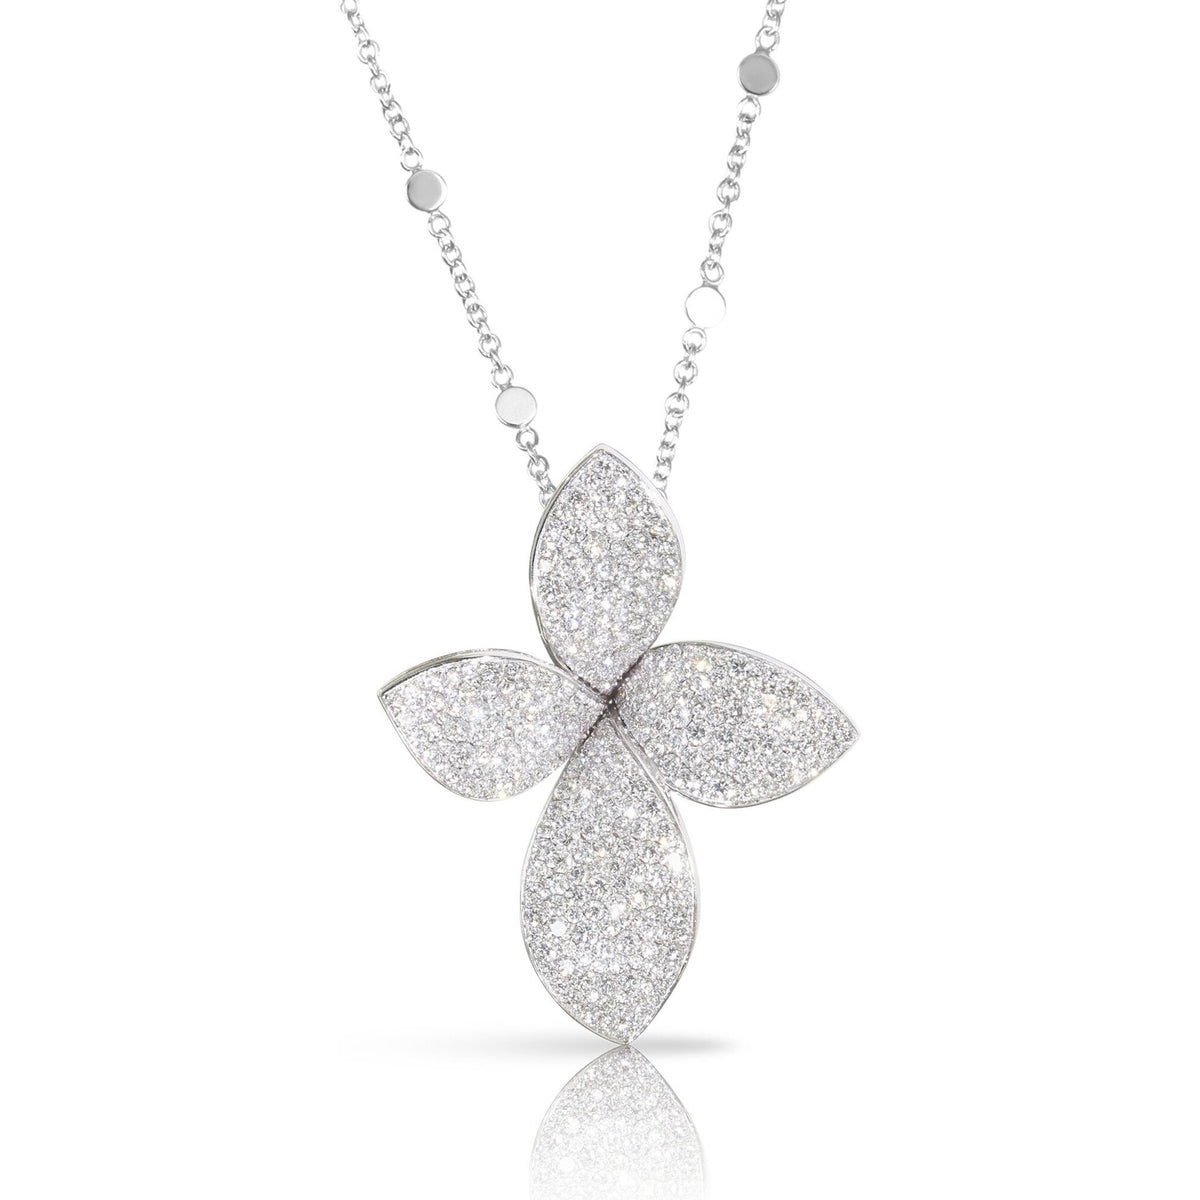 Pasquale Bruni - Giardini Segreti Medium Flower Necklace in 18k White Gold with White Diamonds